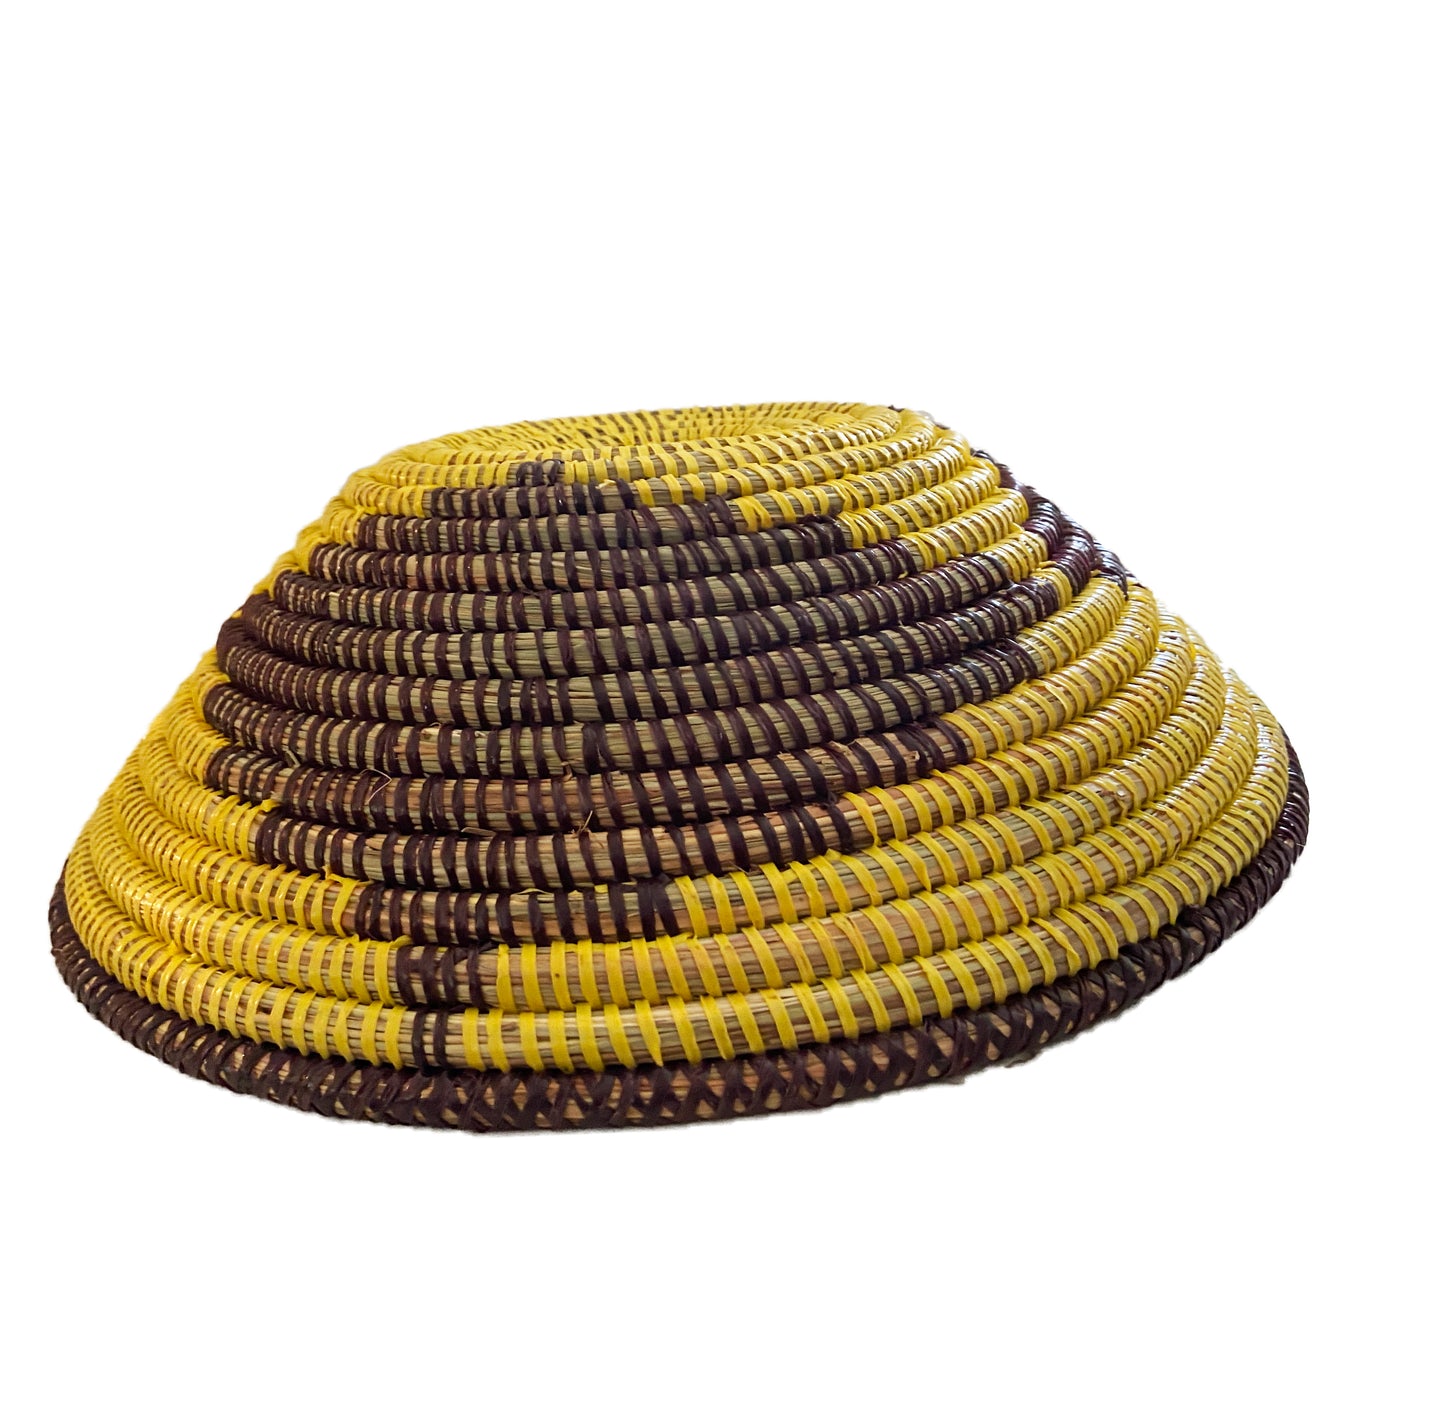 #3538 Lg Handmade Woven Wolof Basket From Senegal 16" in D